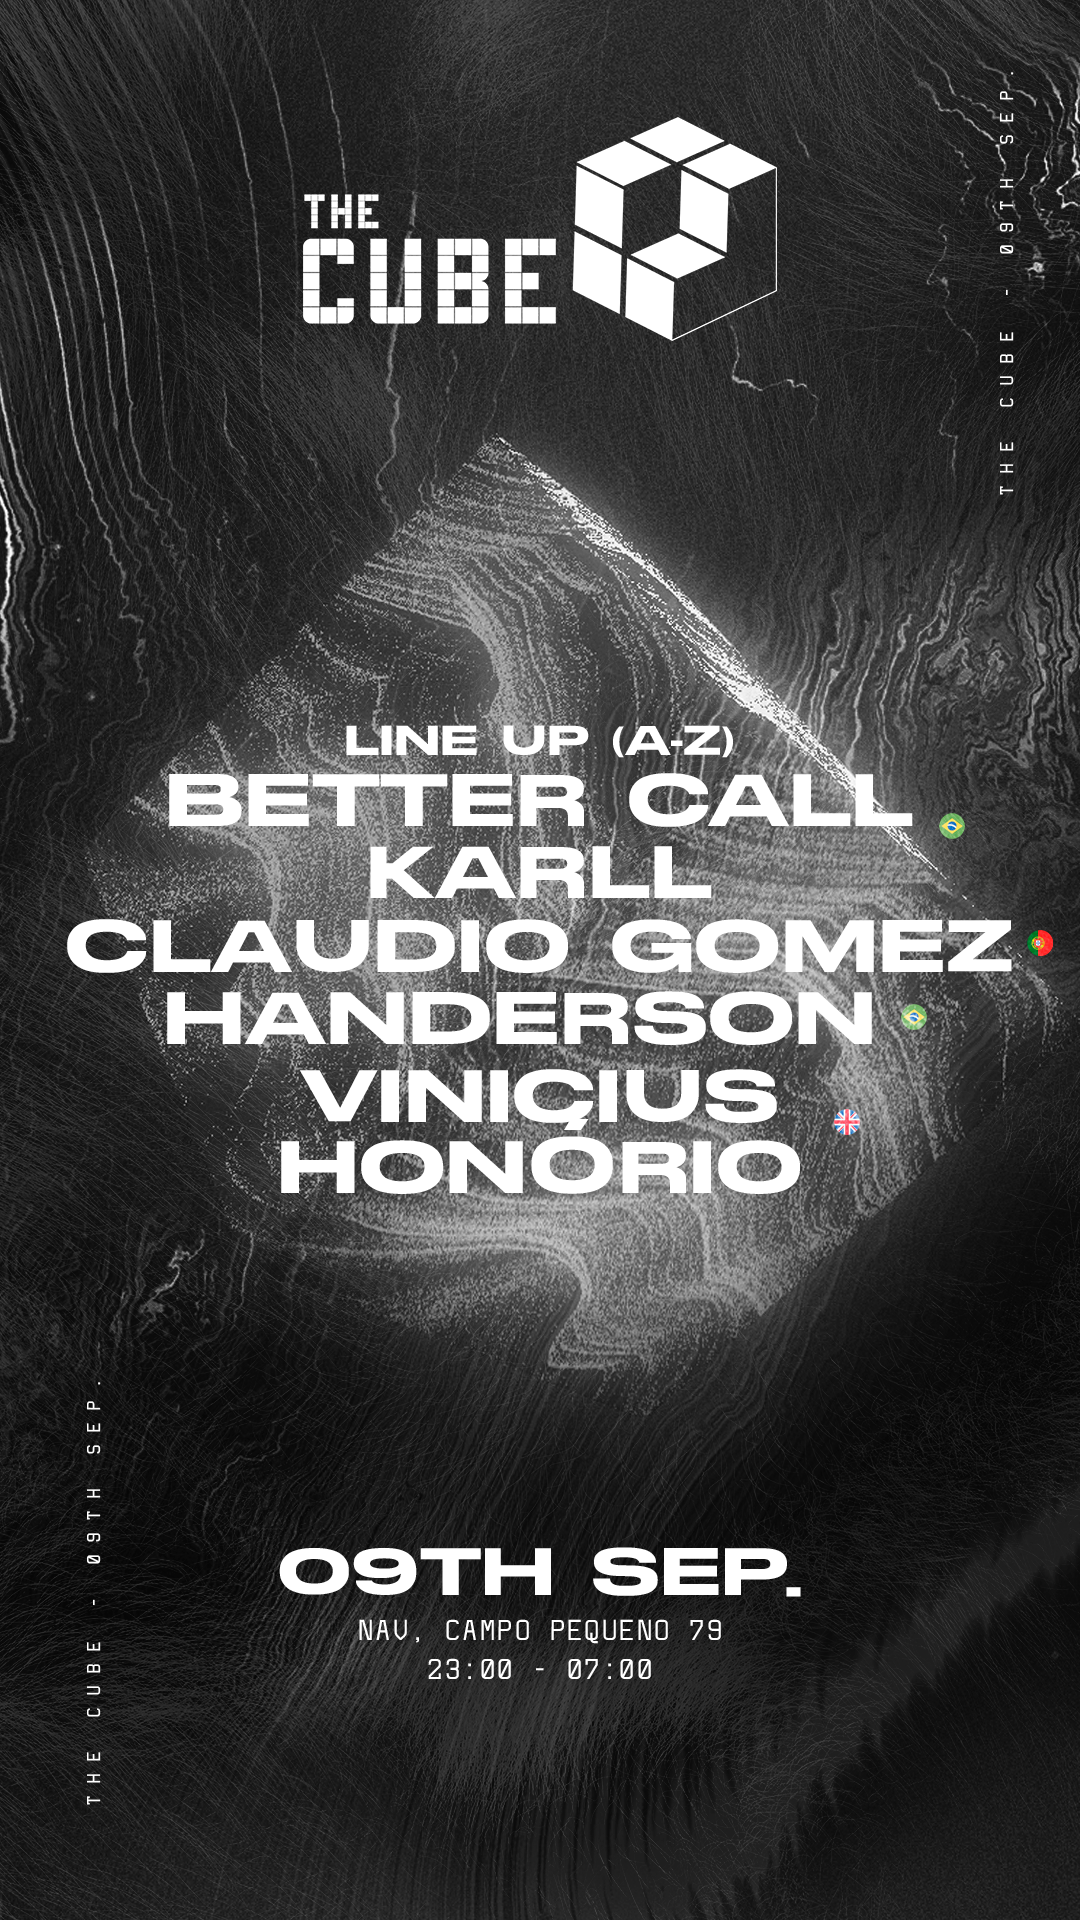 The Cube with Vinicius Honório (UK), Better Call Karll (BR), Cláudio Gomez (PT), Handerson (BR) - フライヤー表